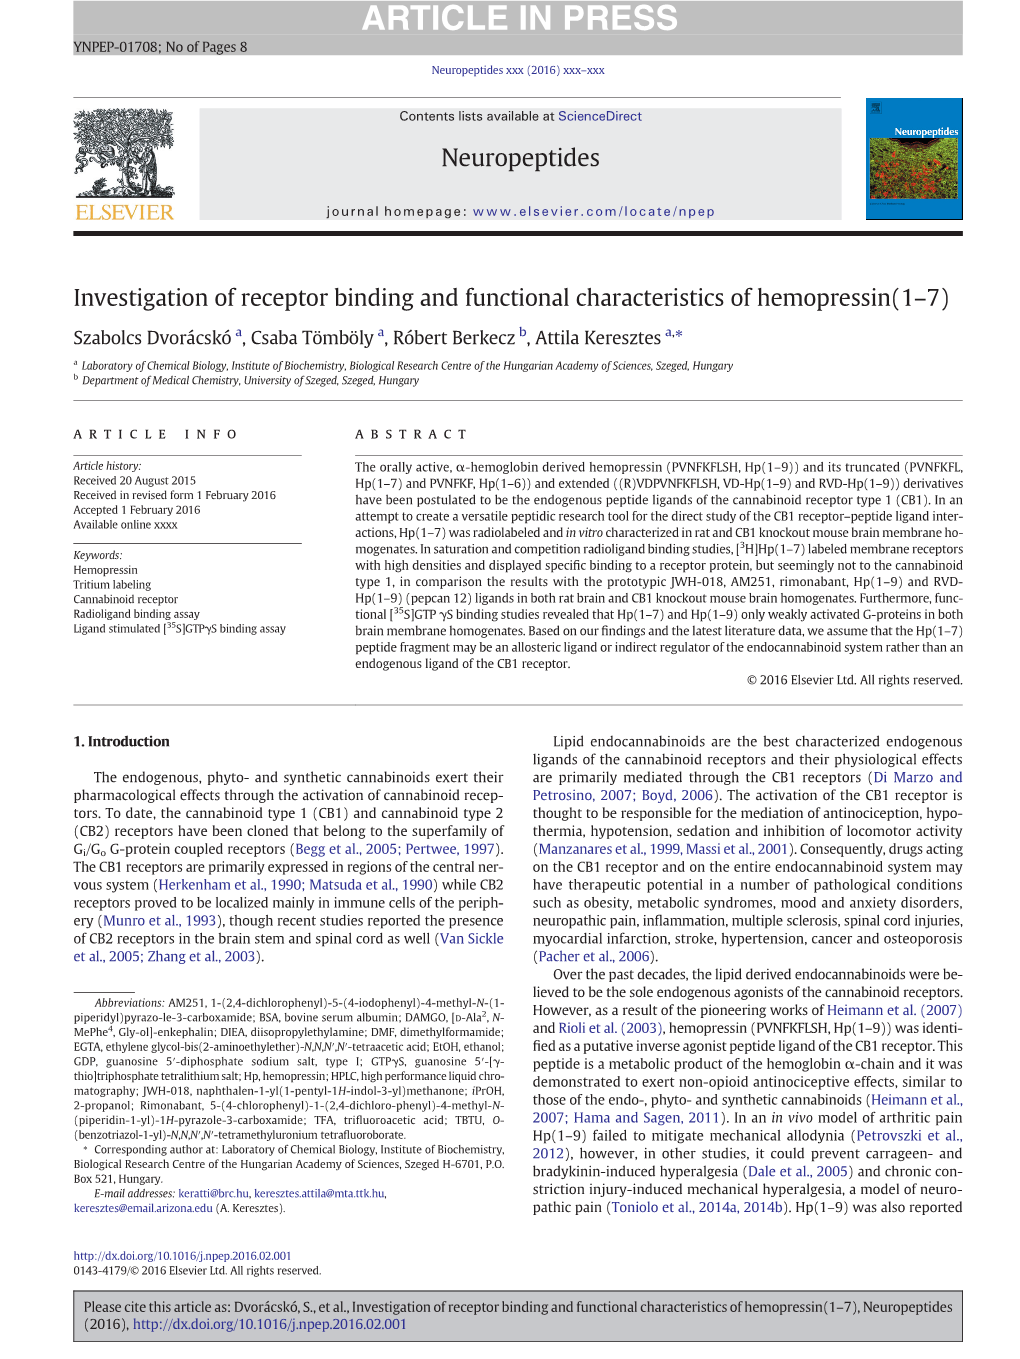 Investigation of Receptor Binding and Functional Characteristics of Hemopressin(1–7)